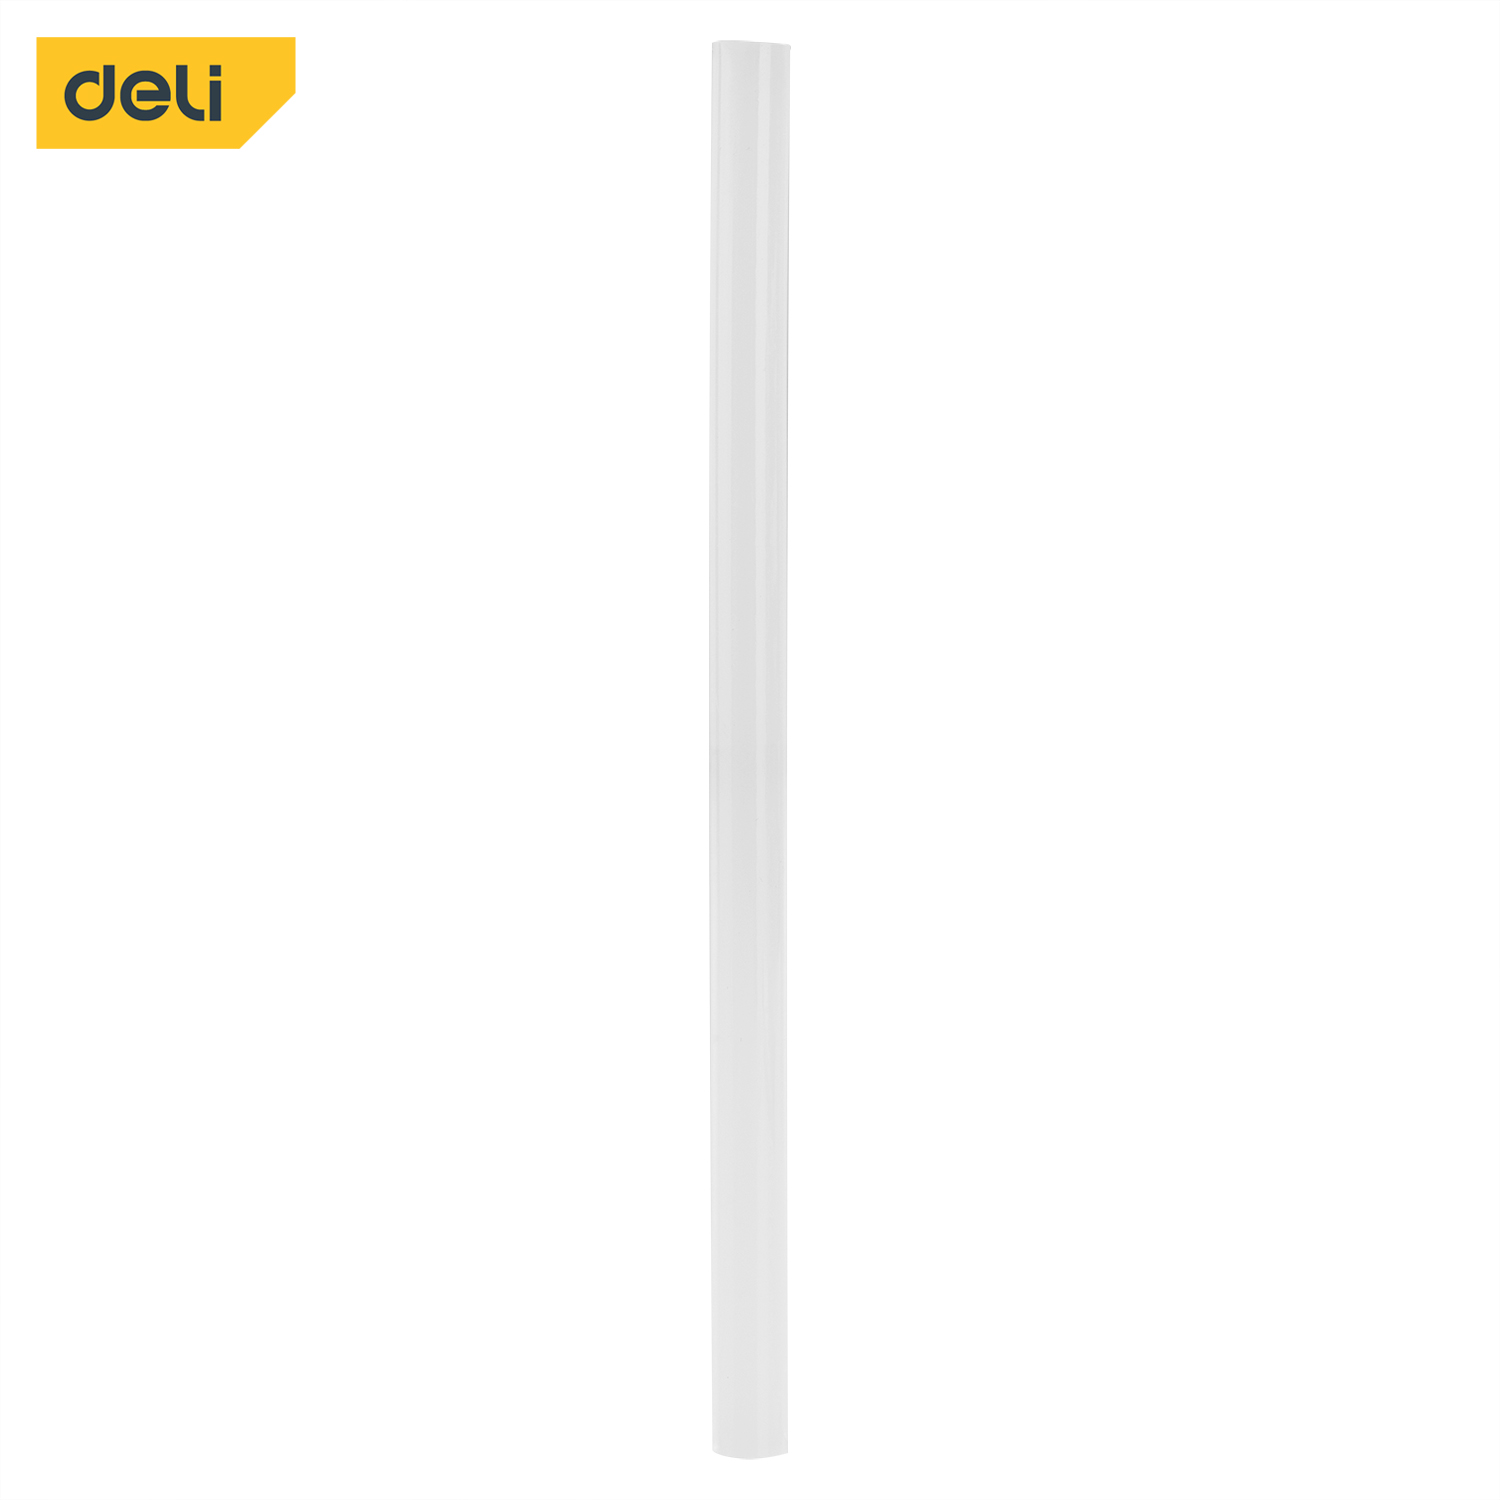 Deli-EDL5043 Hot Melt Glue Stick